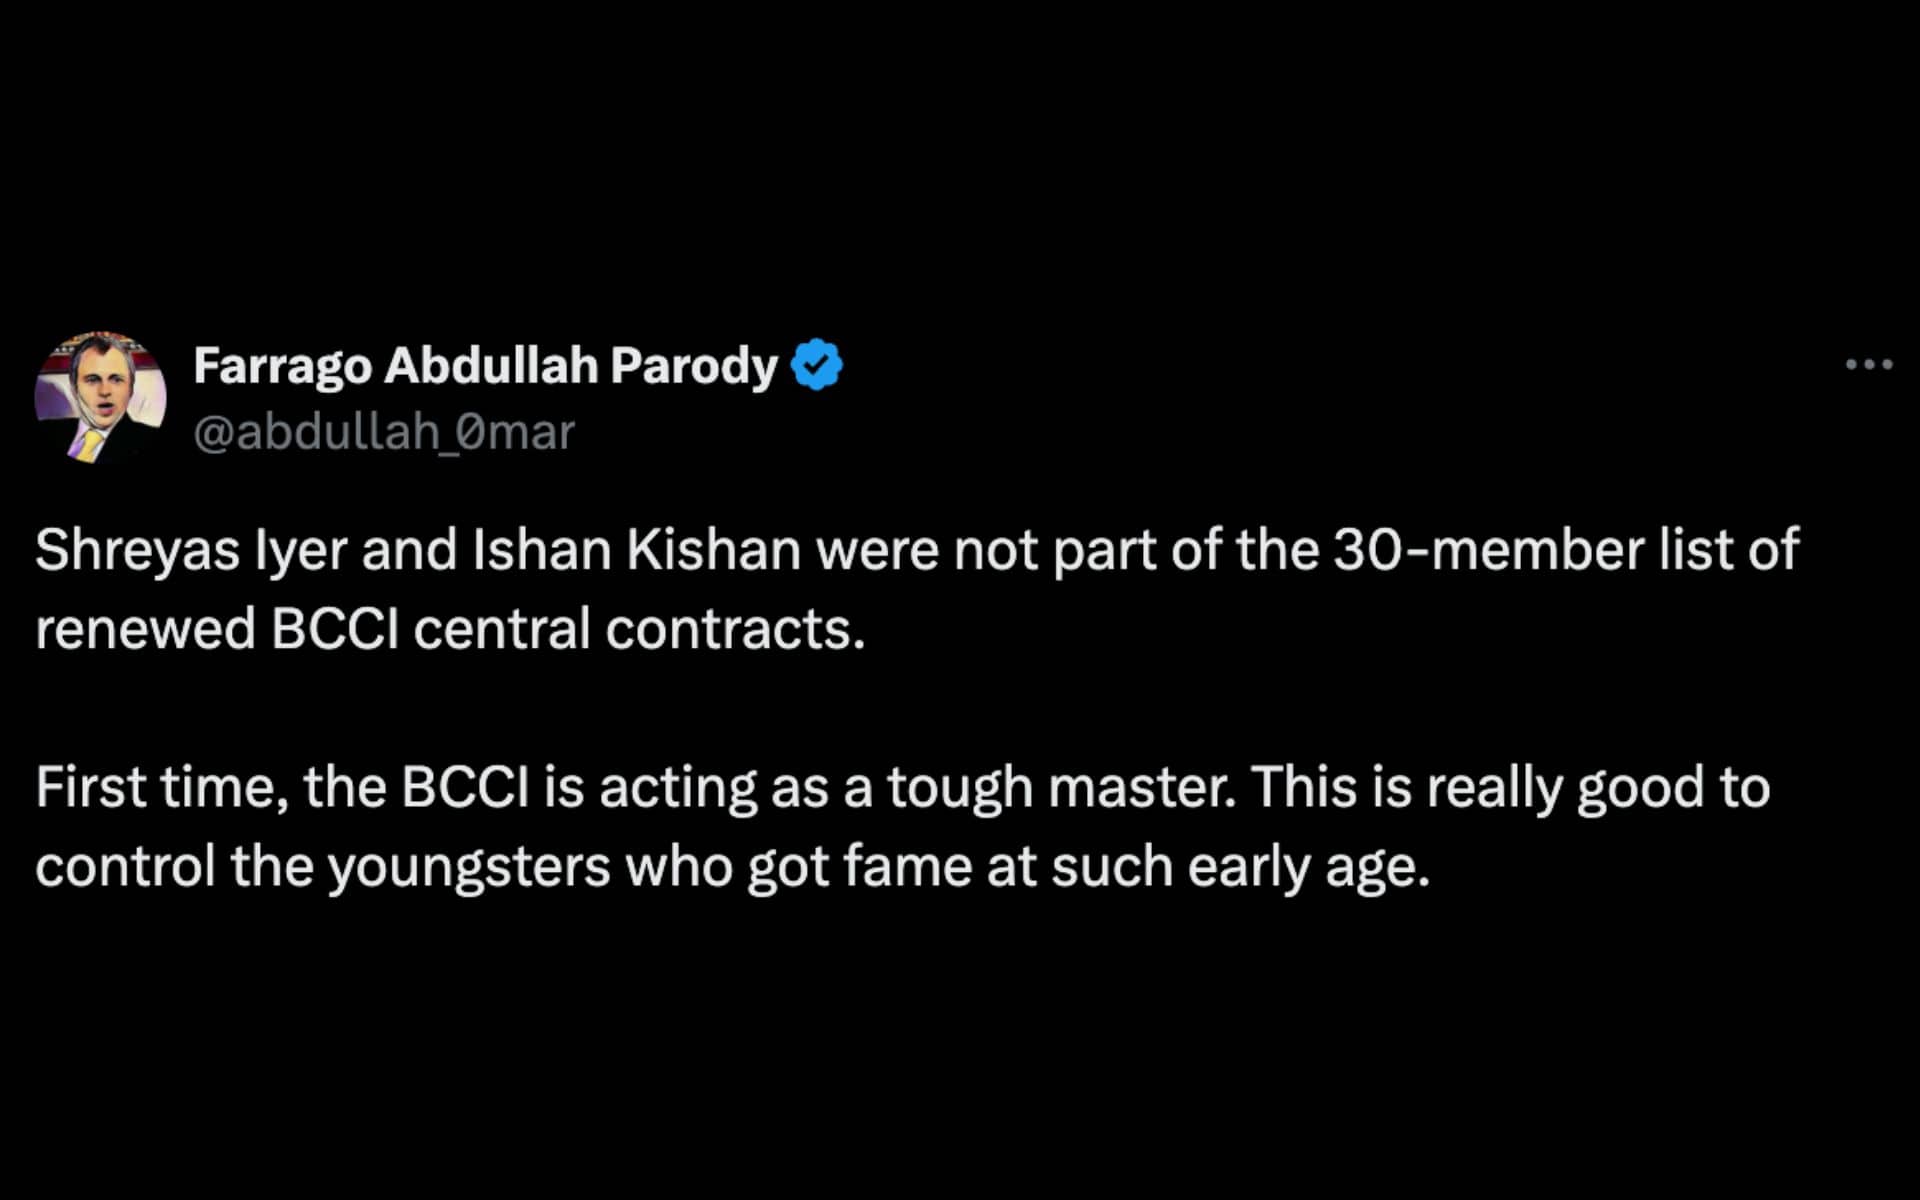 An Indian fan calls BCCI a tough master